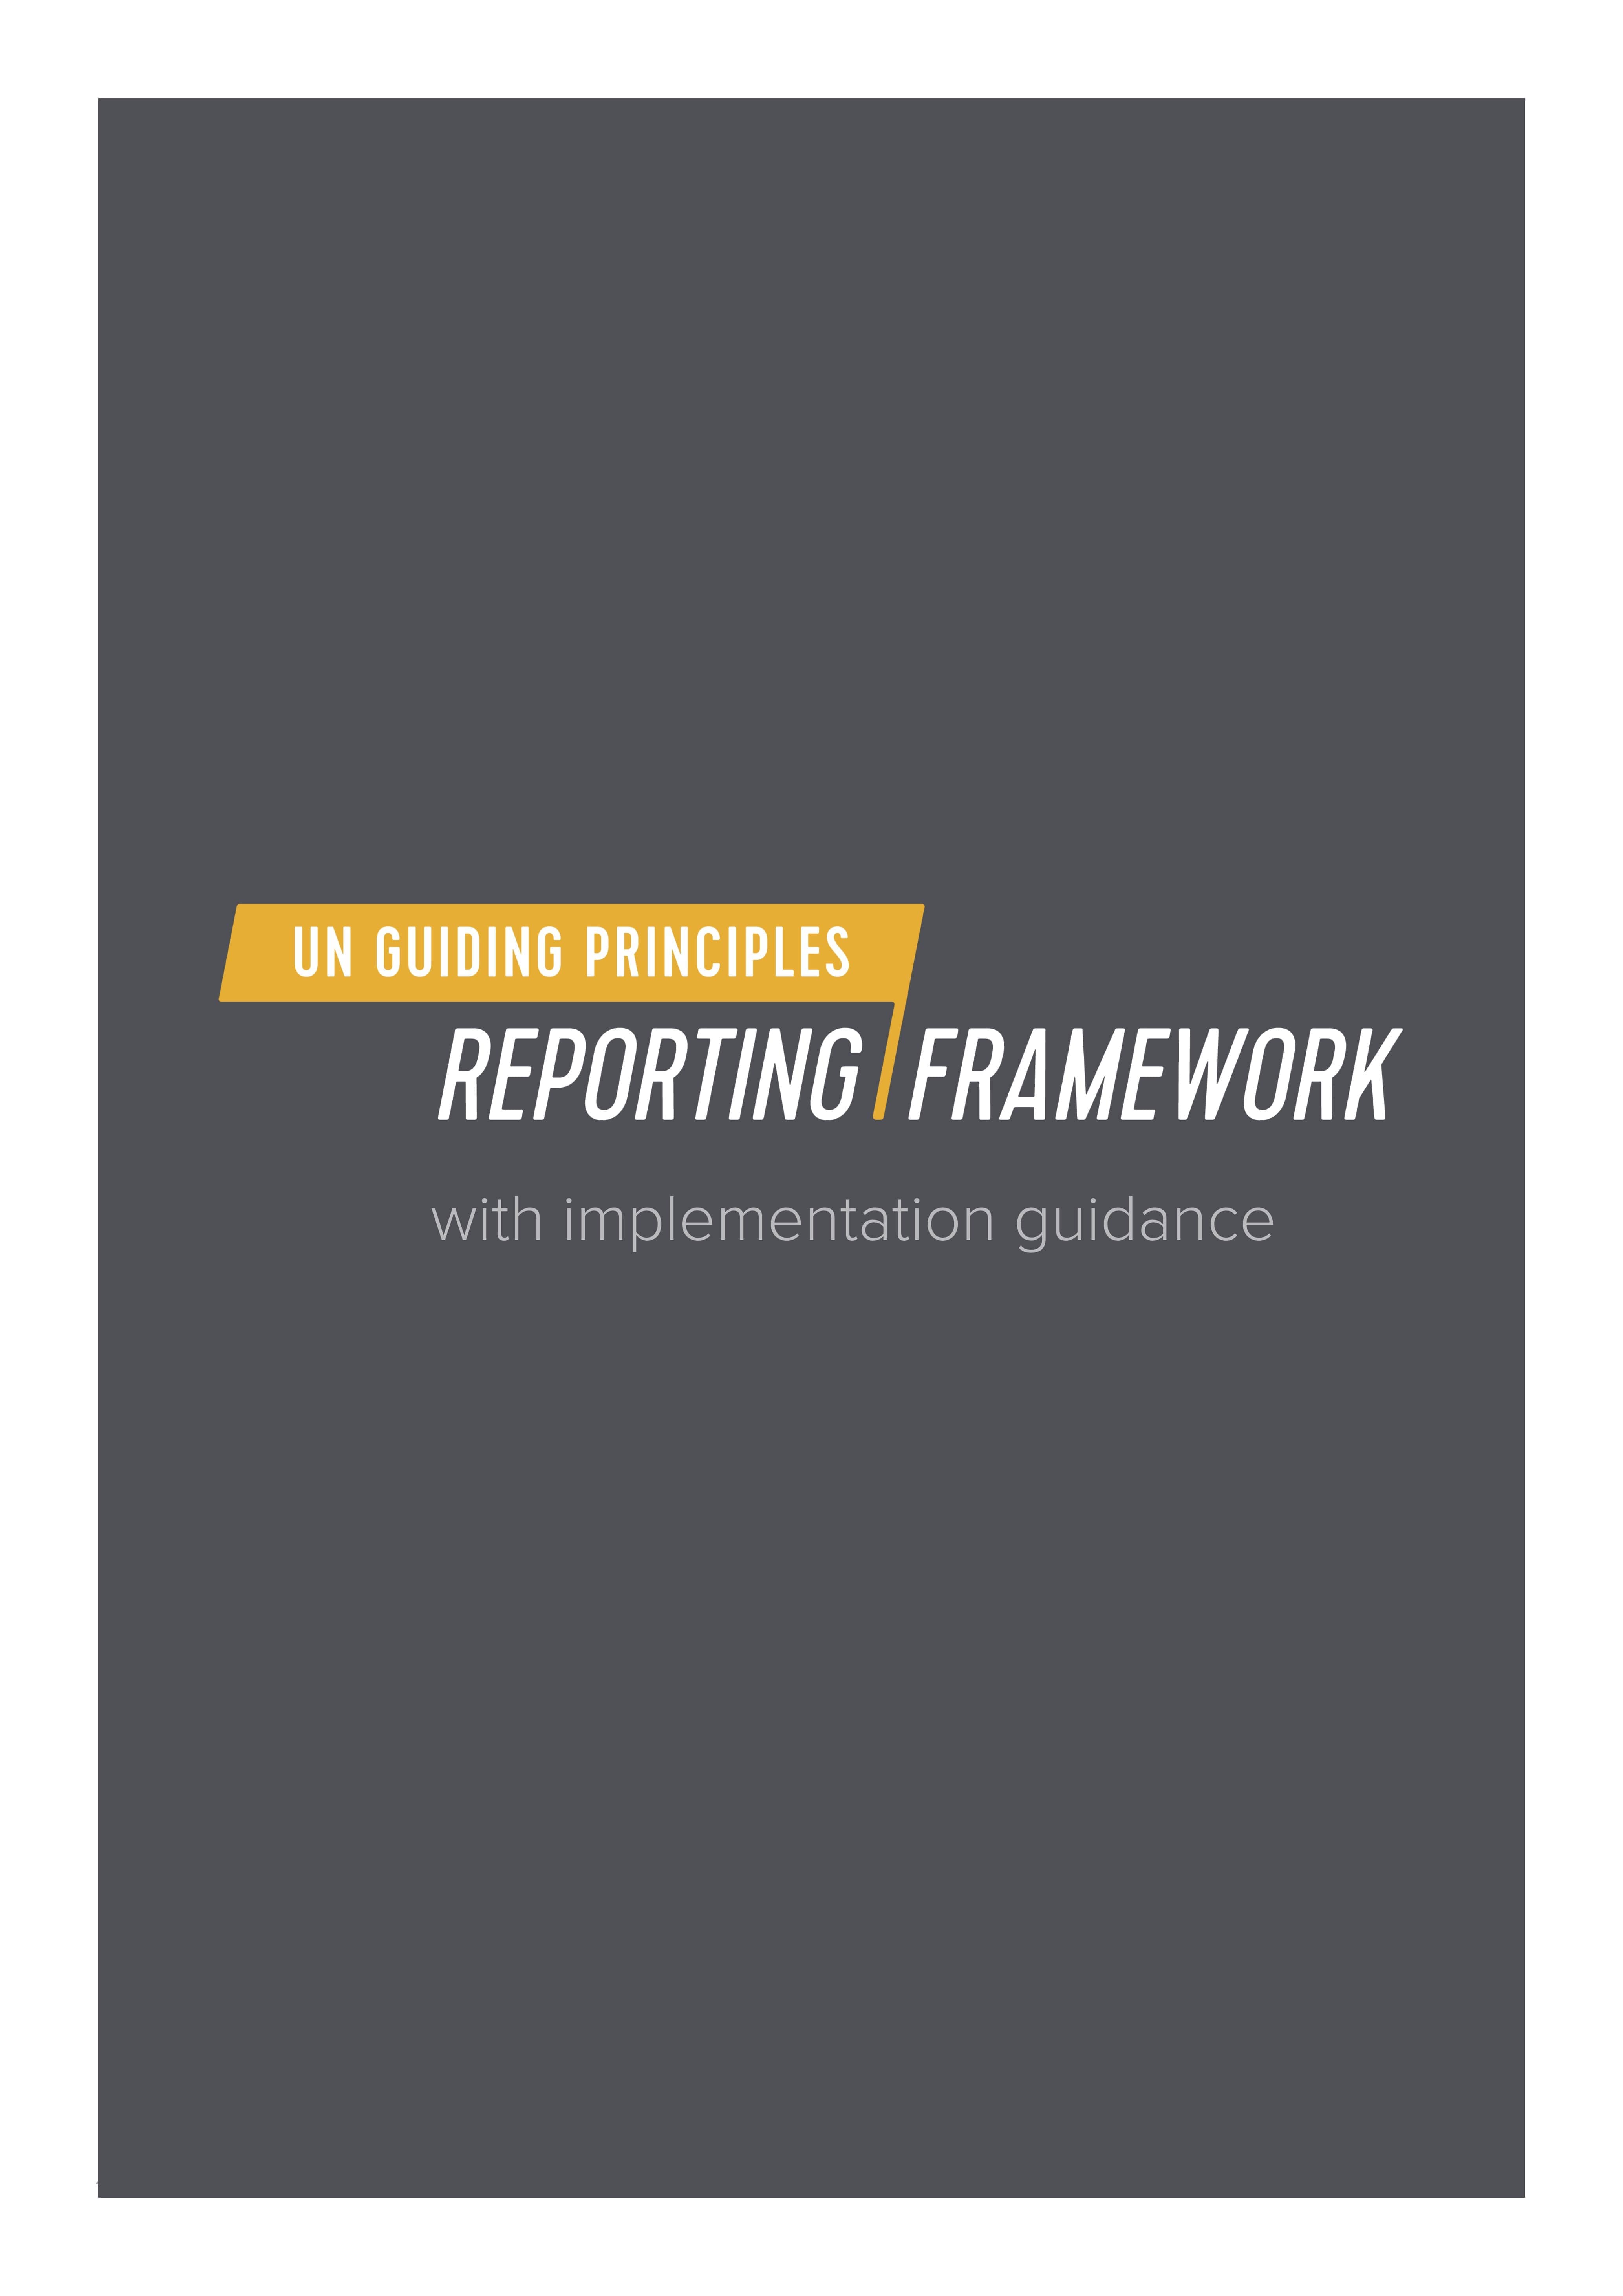 UN Guiding Principles Reporting Framework (Shift and Mazars, 2015)